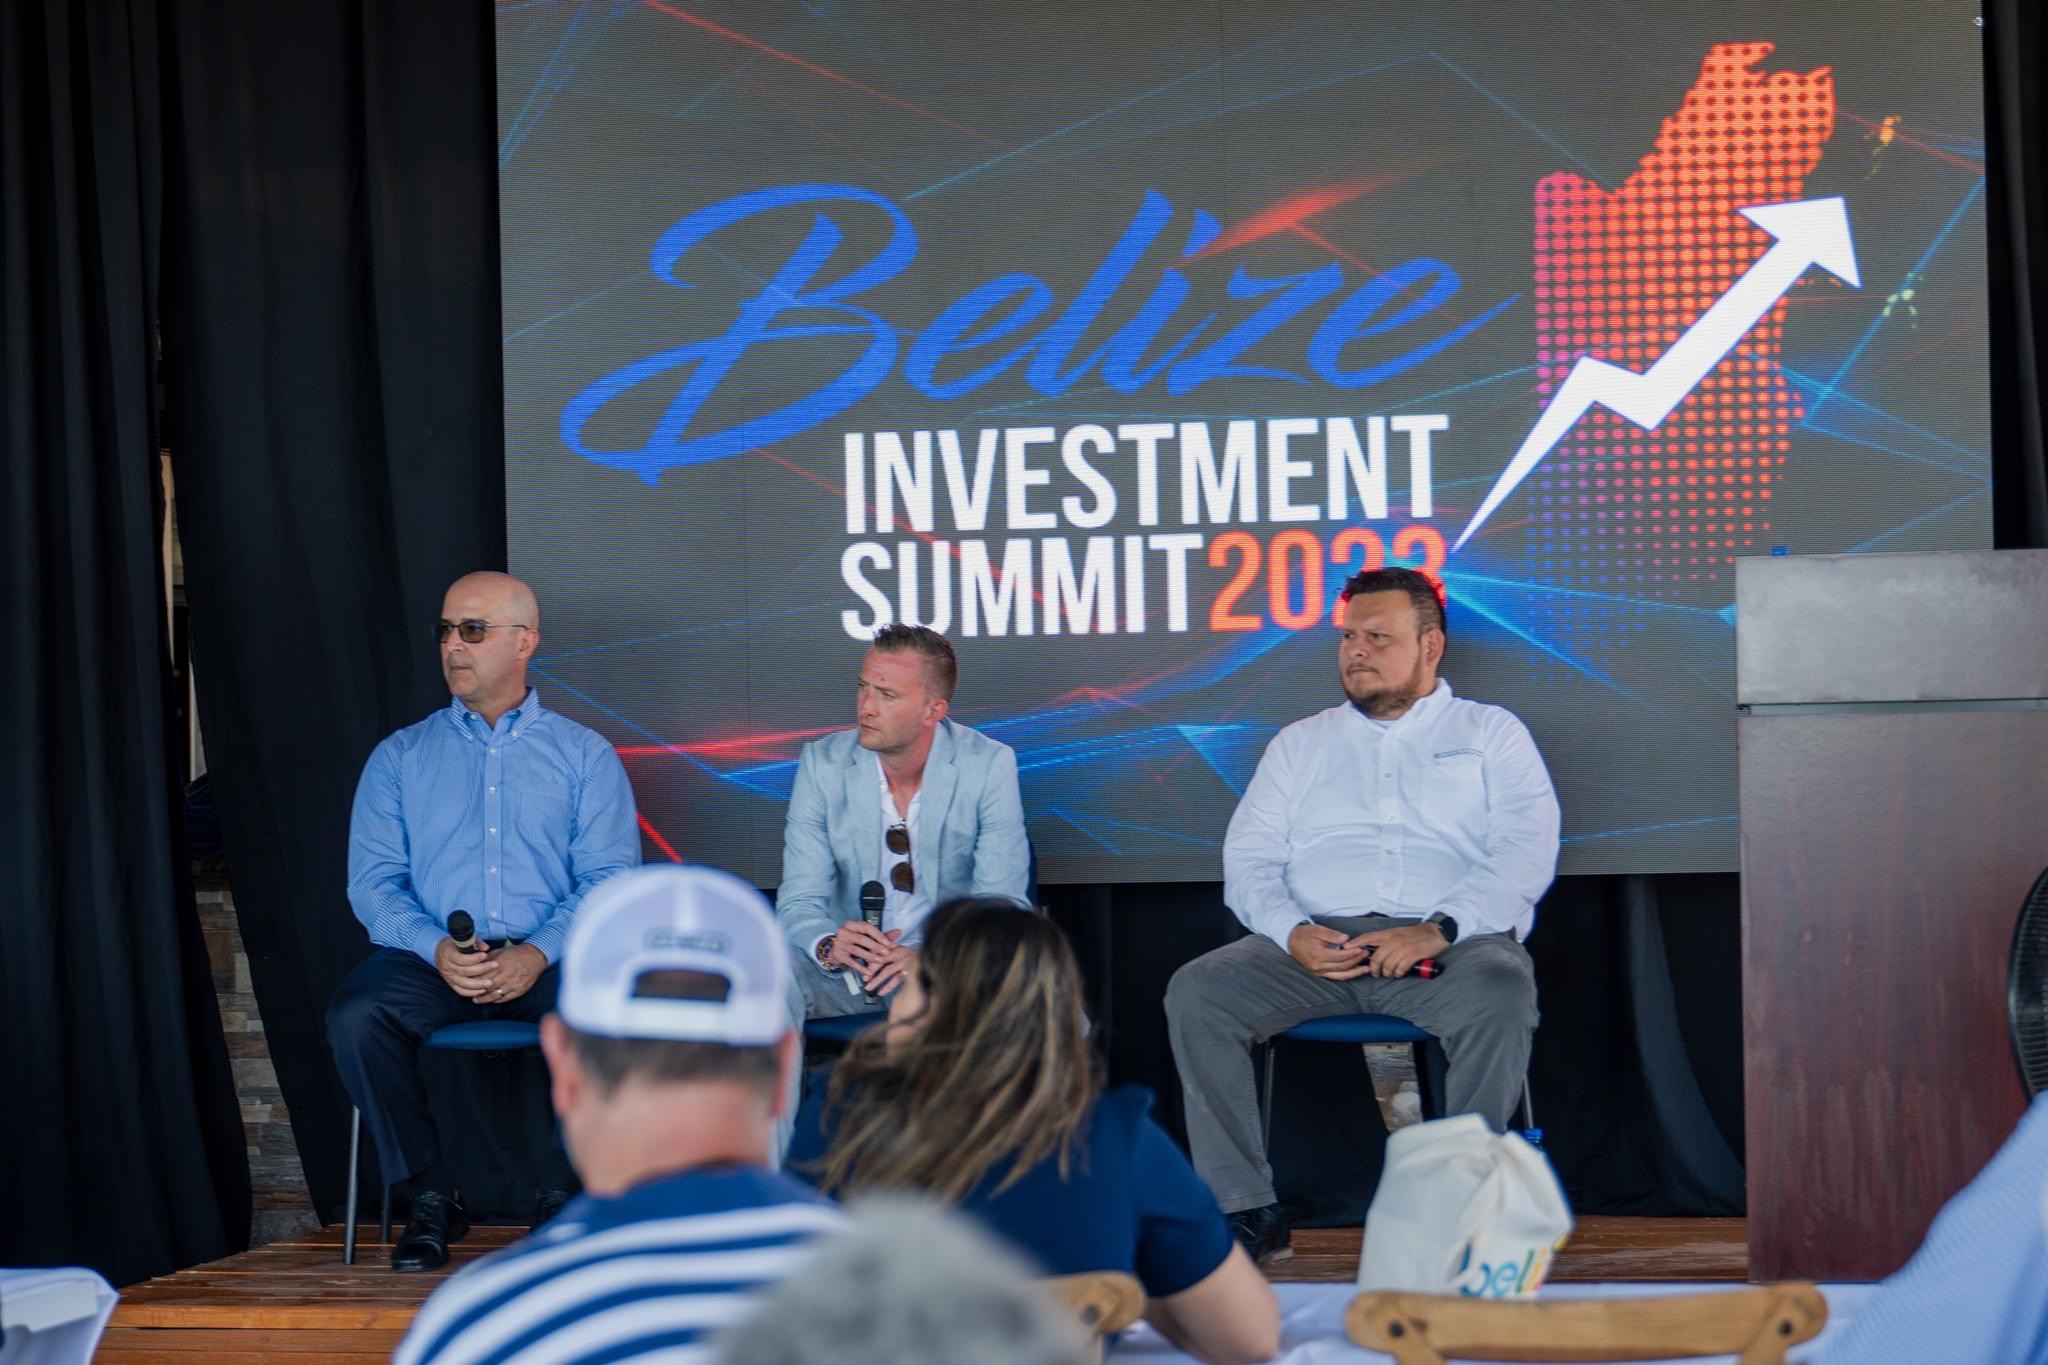 Belize Investment Summit Panel Explores Belize Real Estate Investment